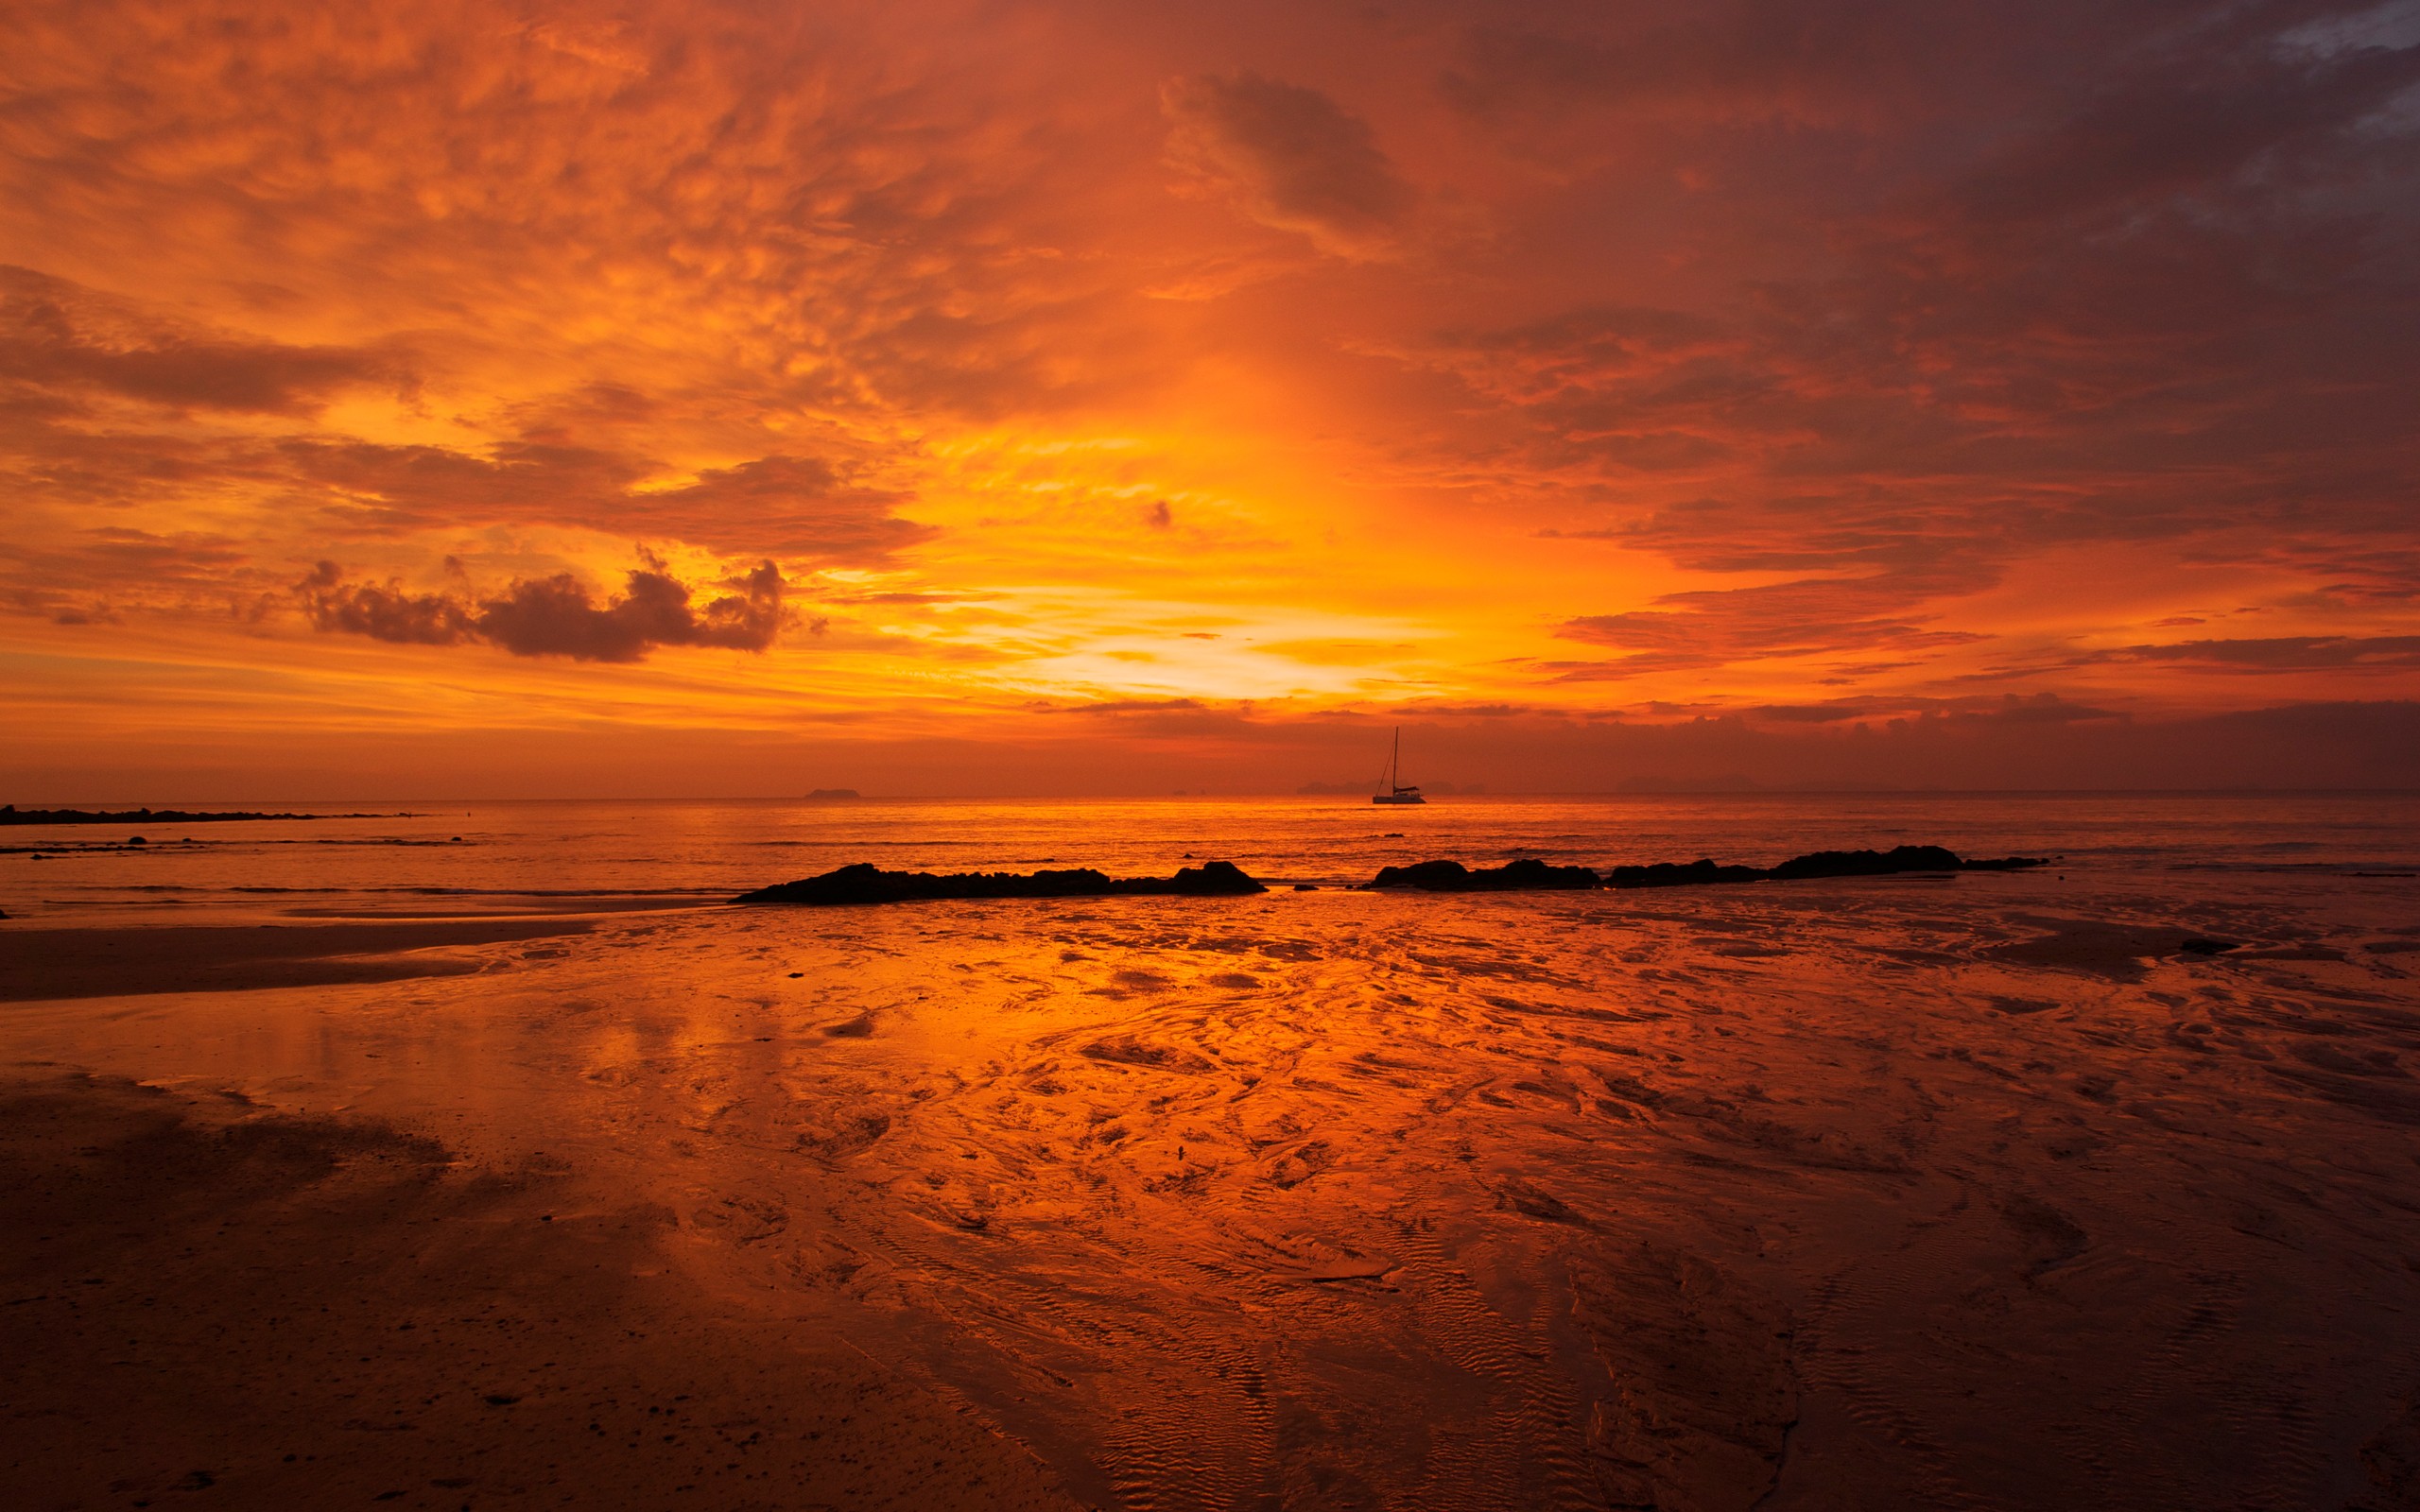 General 2560x1600 landscape nature sunset sea skyscape orange sky boat horizon sunlight dark outdoors